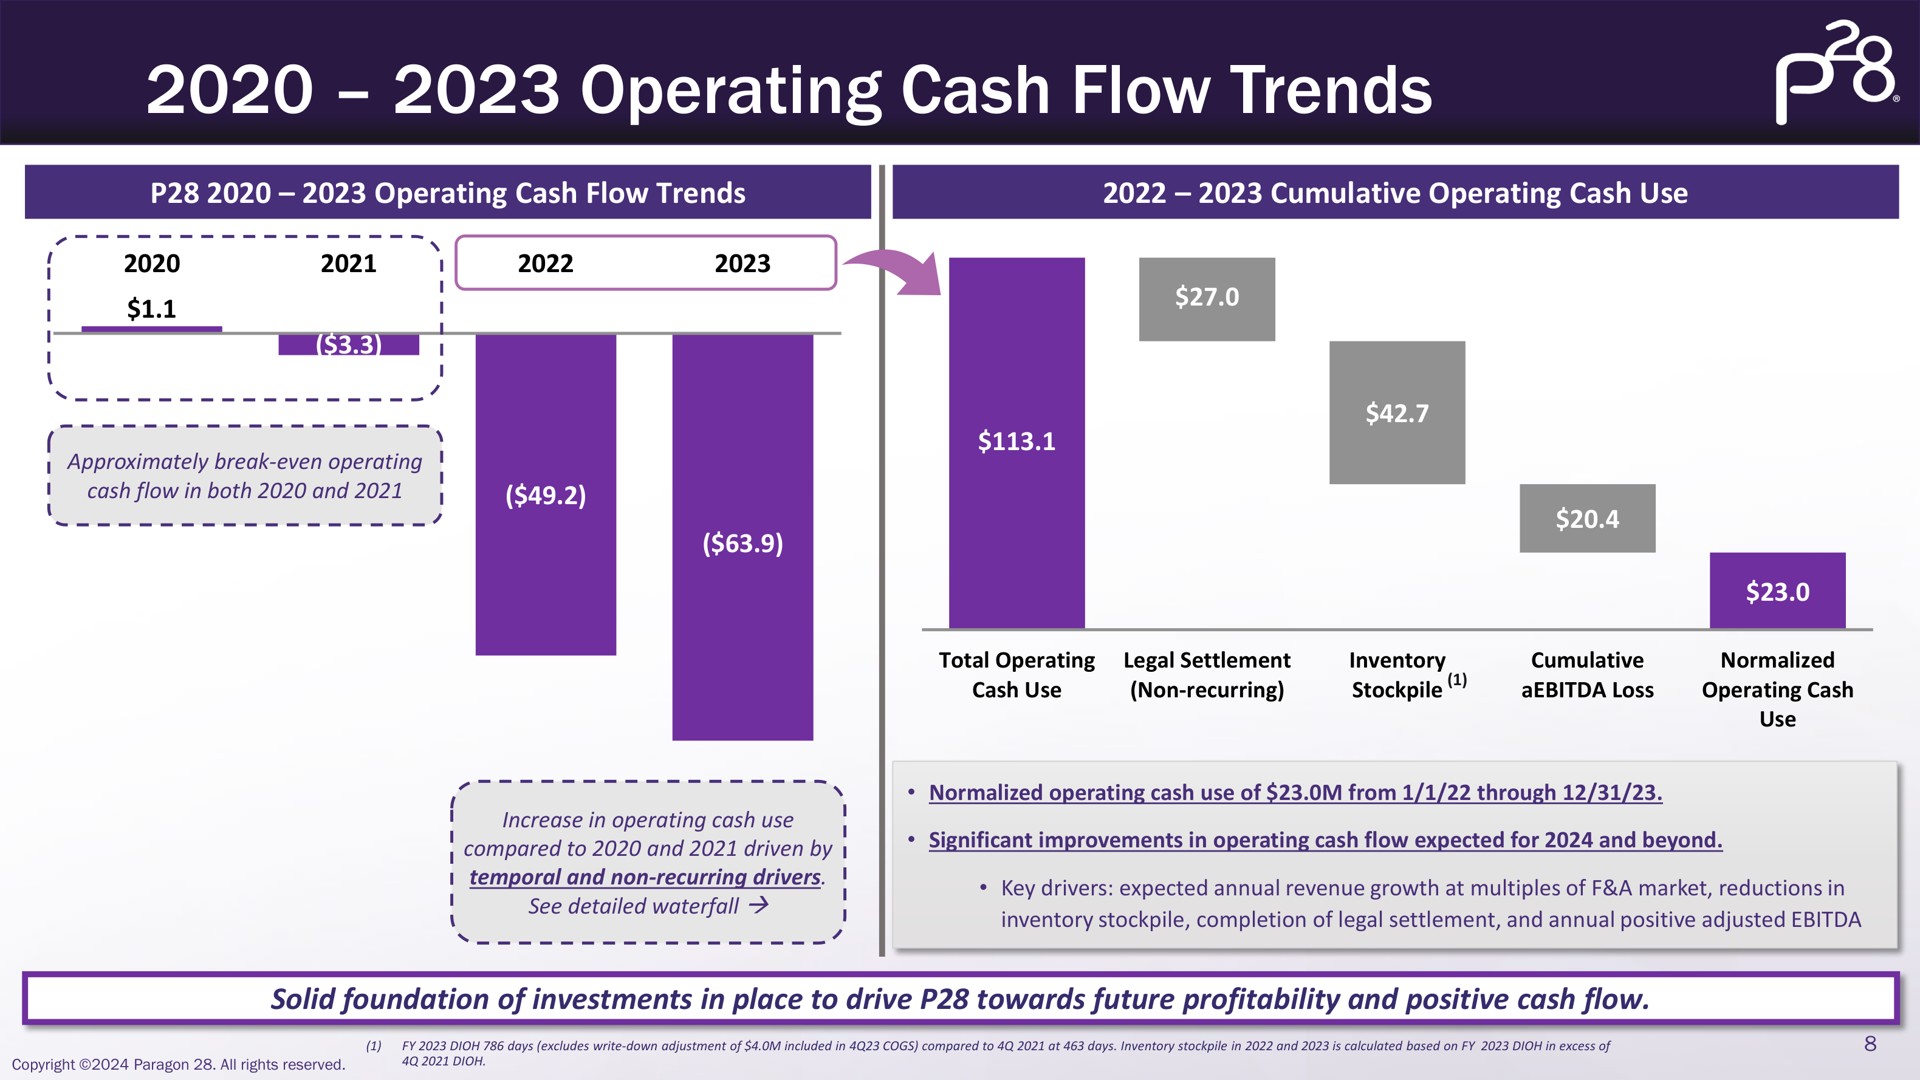 operating cash flow trends | Paragon28